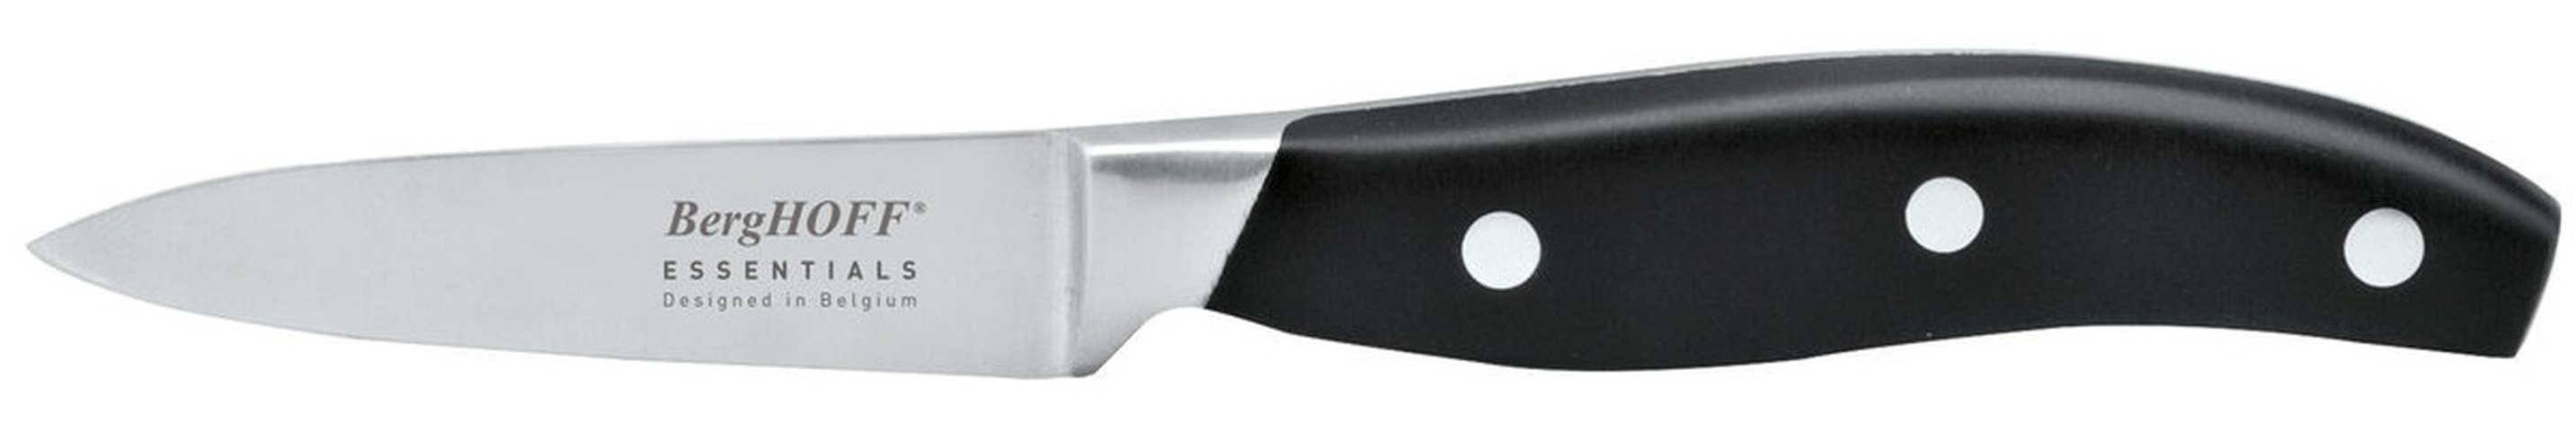 15 ножевых 1. Набор ножей 15 предметов BERGHOFF (1307144). BERGHOFF Essentials набор ножей 15 пр 1307144. BERGHOFF Essentials ножи. BERGHOFF Essentials сантоку.